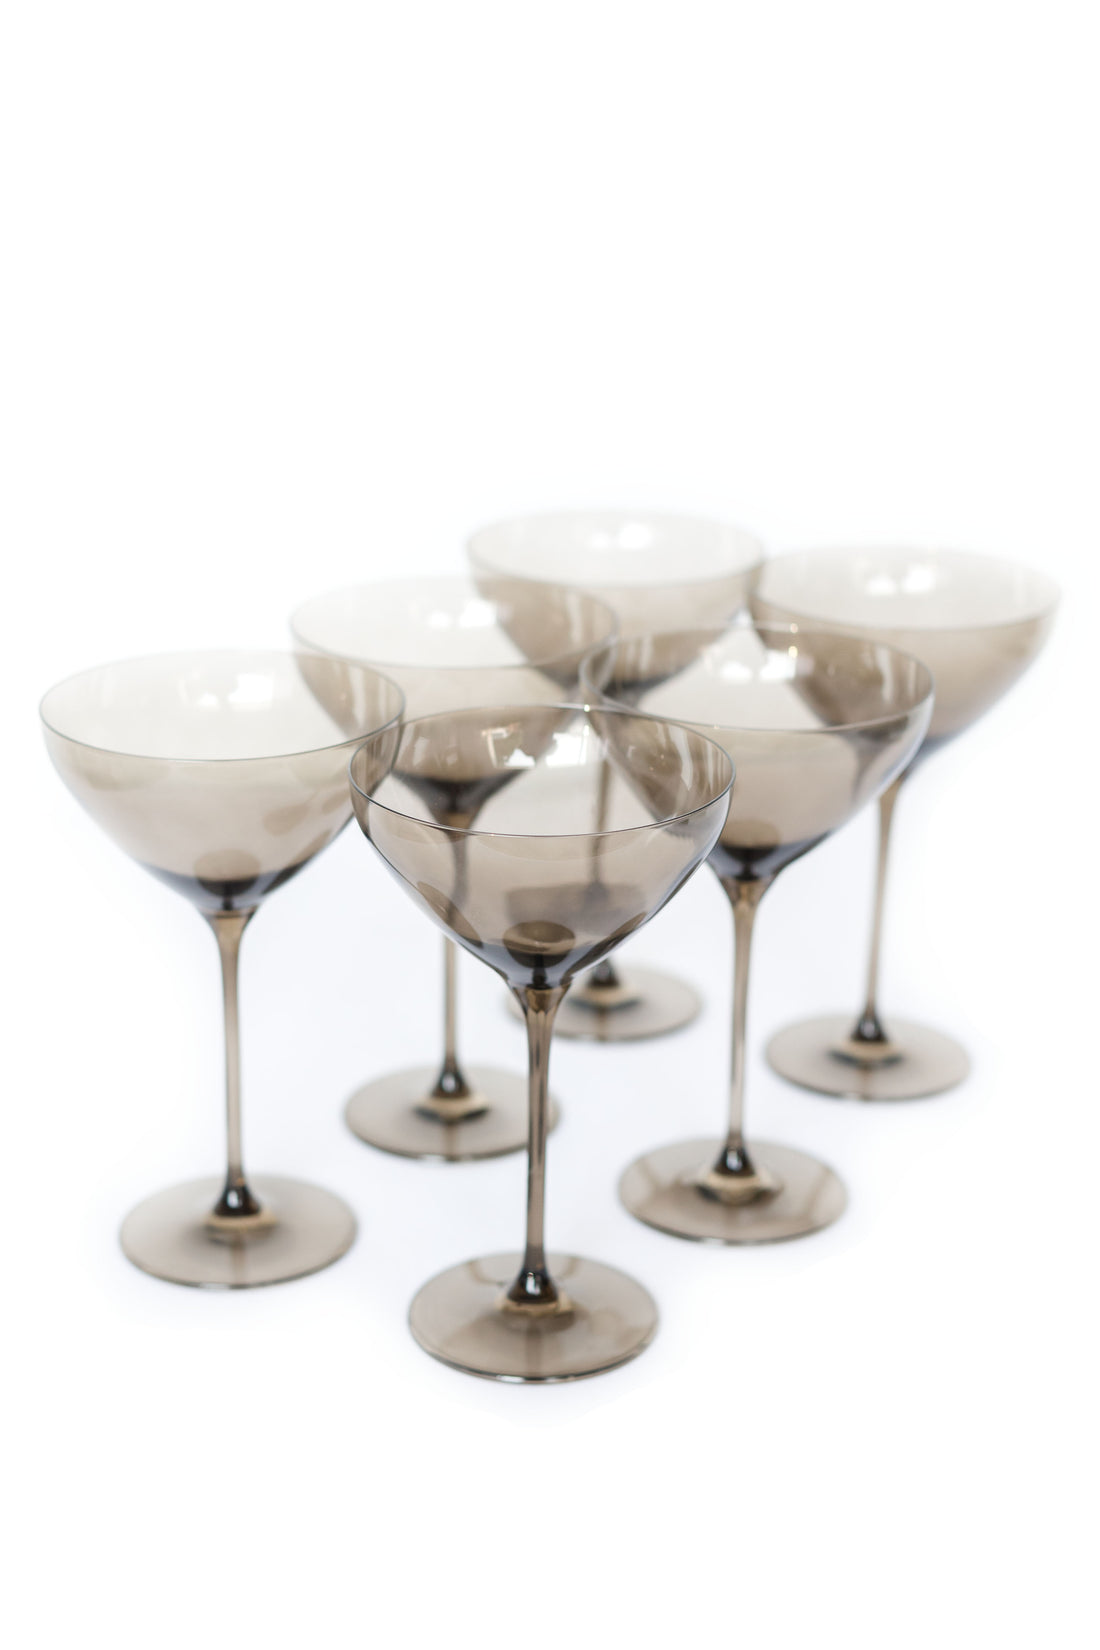 Zodax Celebration Martini Glass - Amber Marie and Company